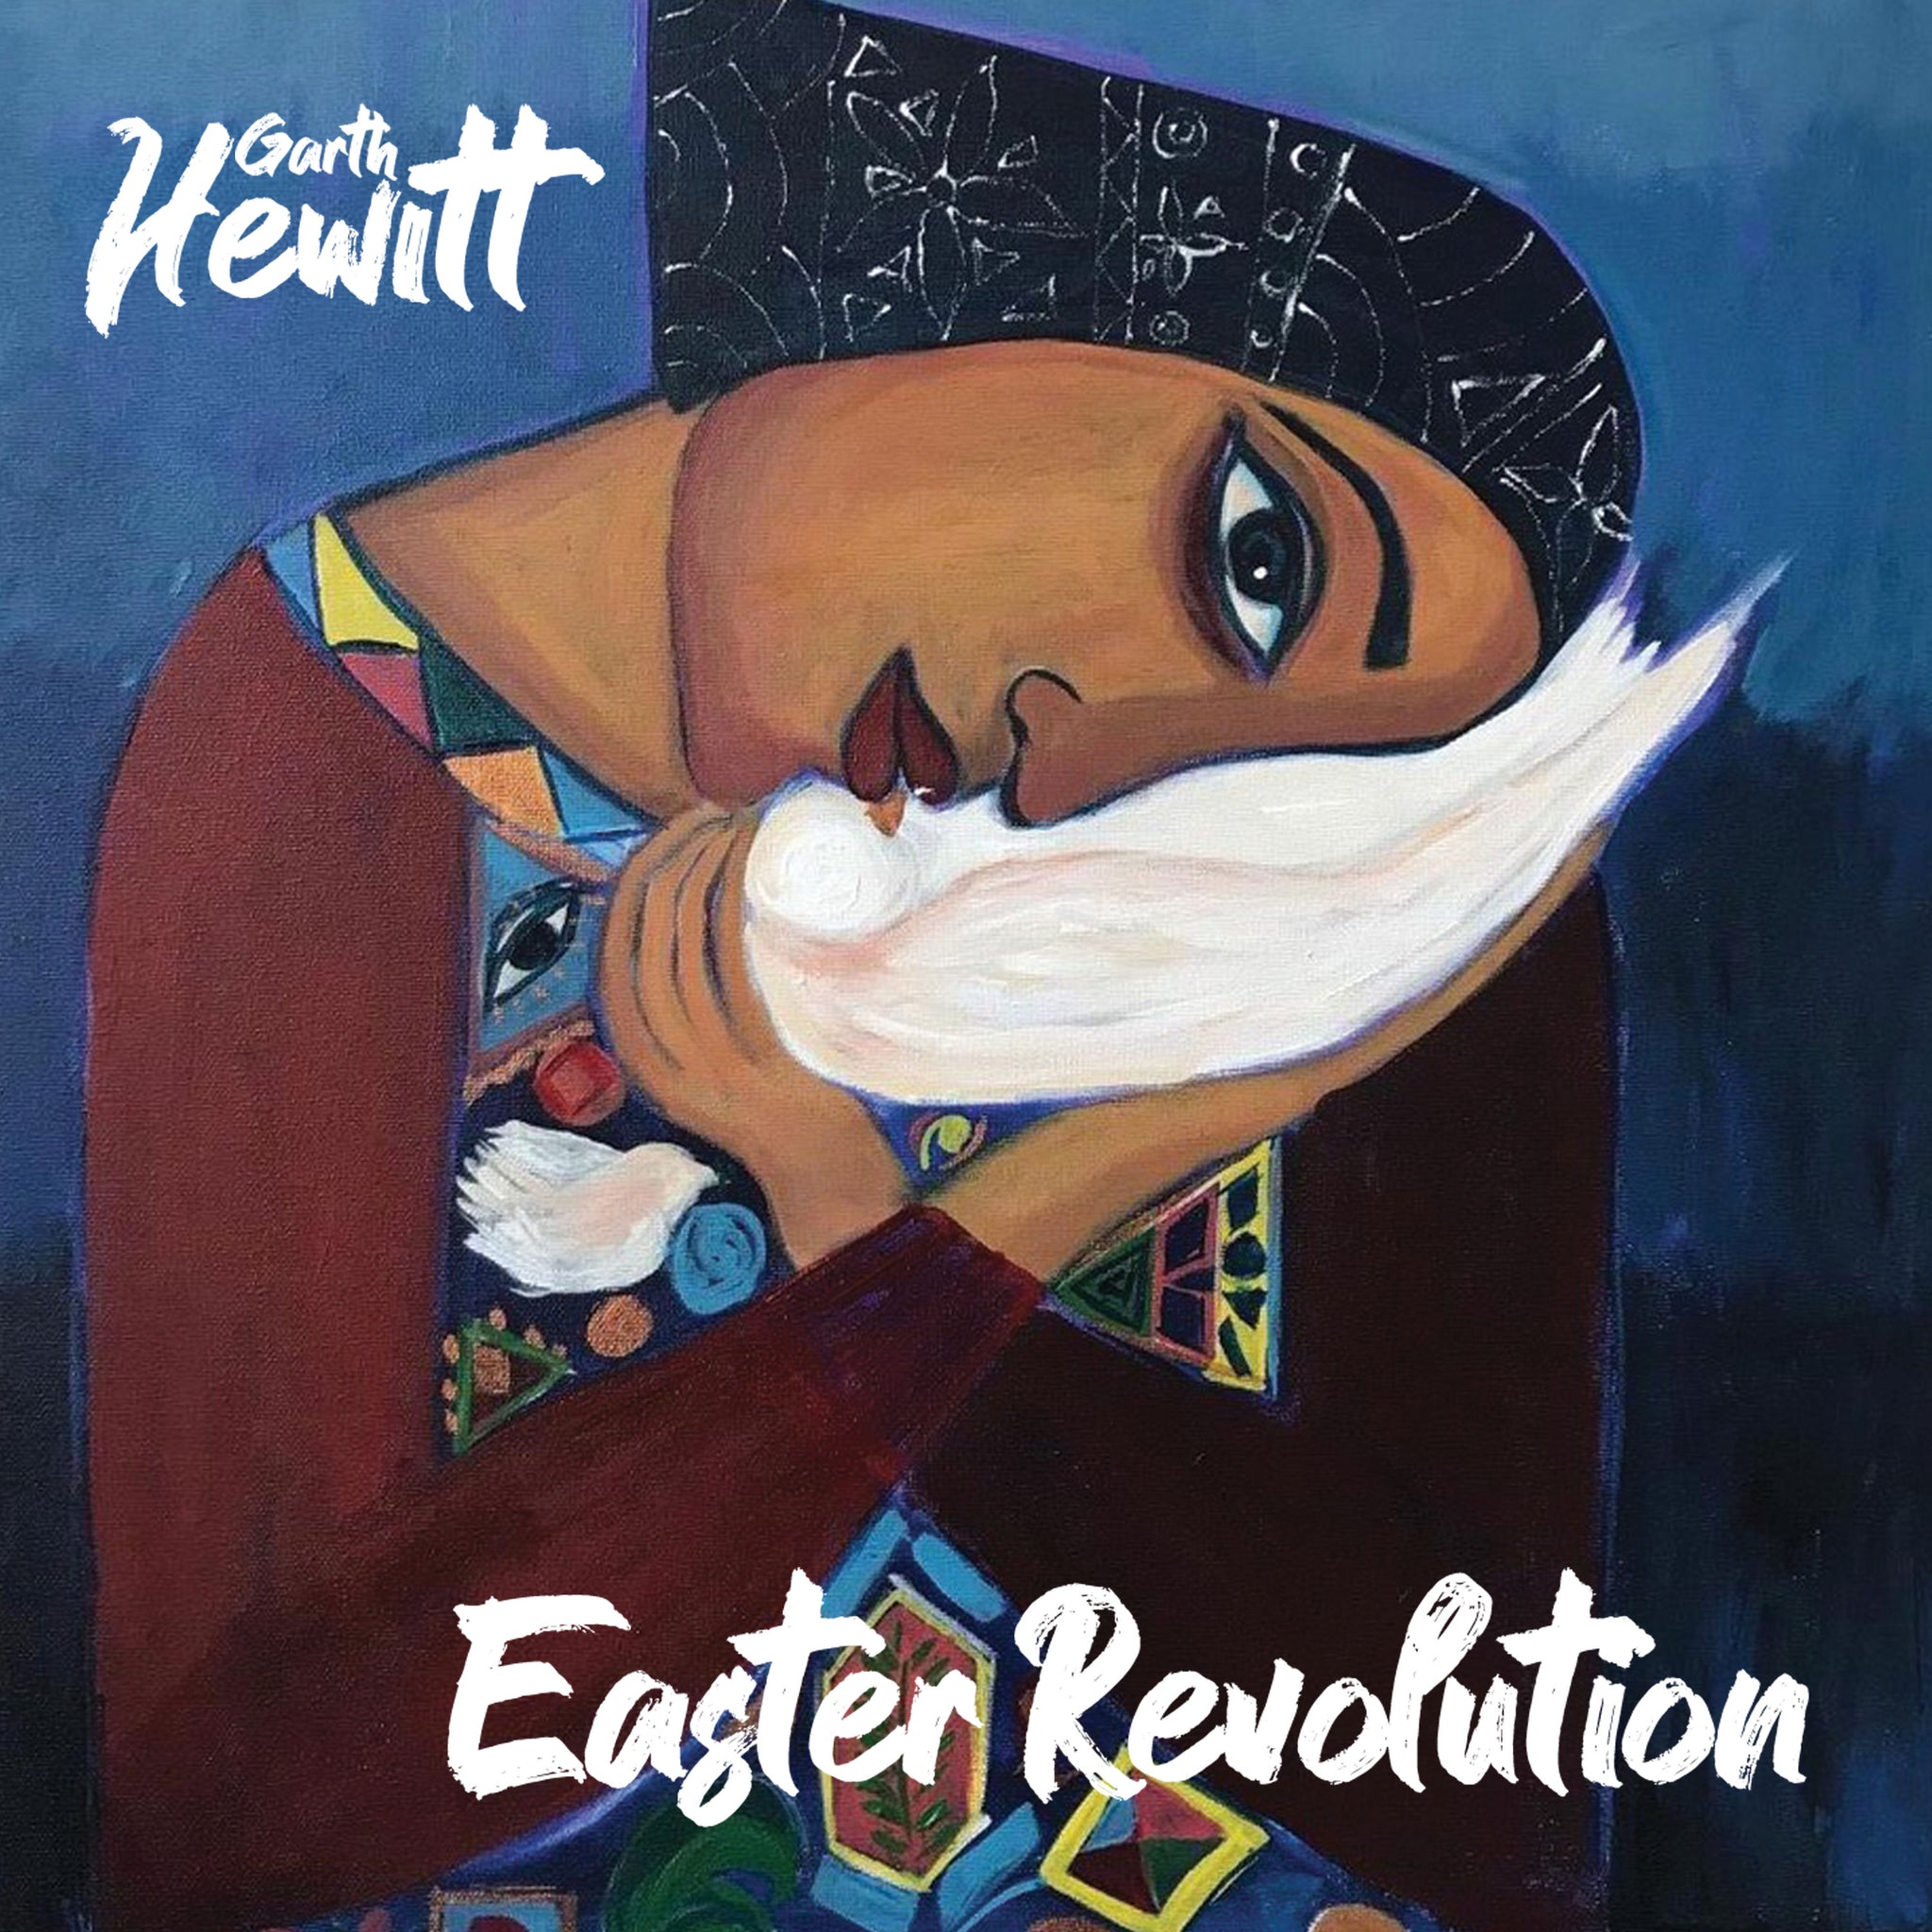 Easter Revolution - Garth Hewitt